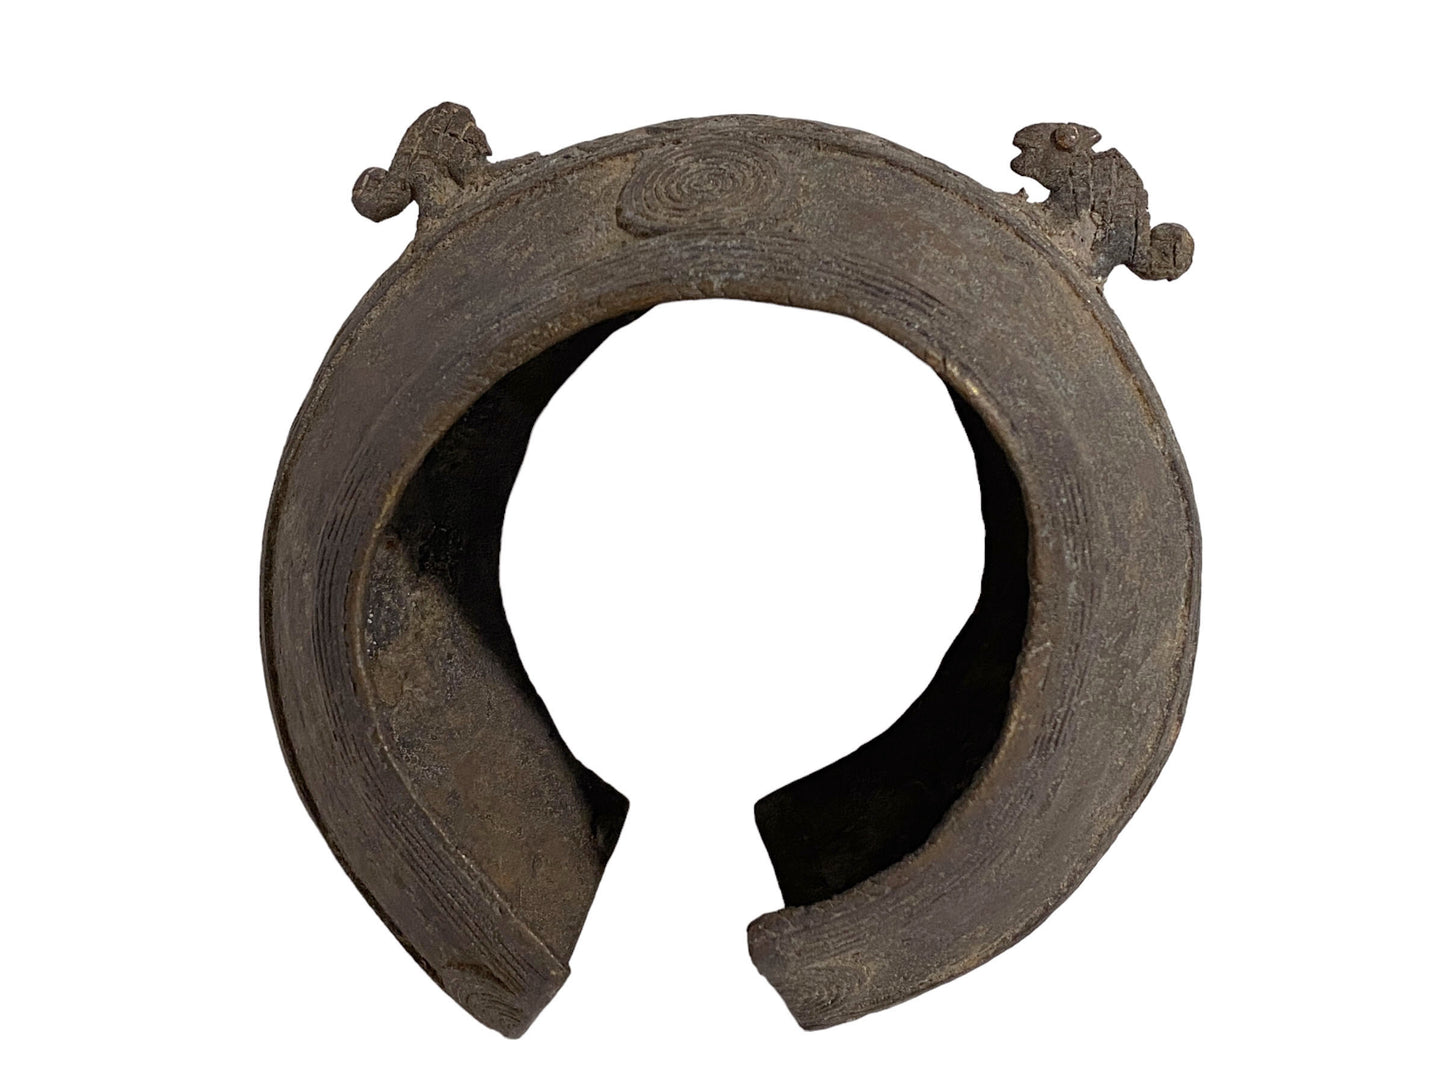 #408  Exquisite Vintage Bronze Chameleon Bracelet Gan Burkina Faso  2.75" H by 5" W